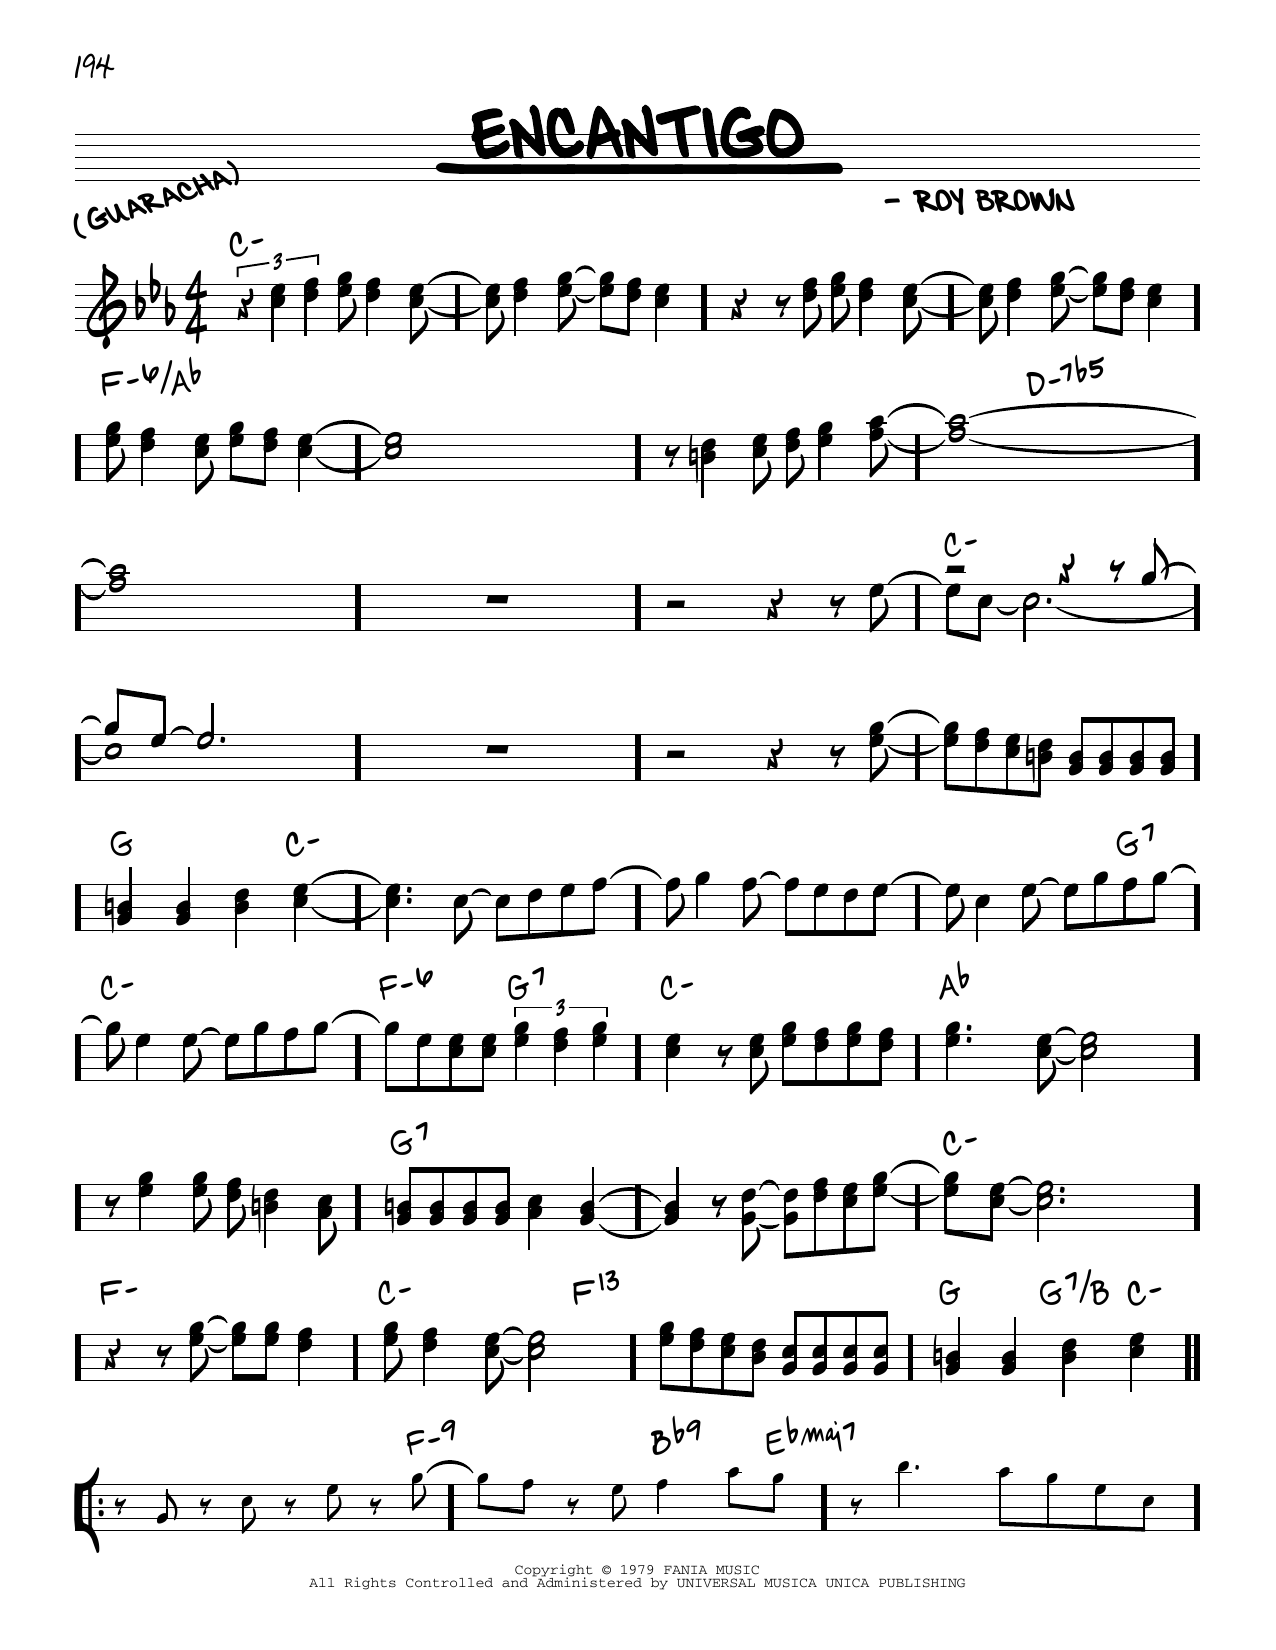 The Fania All-Stars Encantigo Sheet Music Notes & Chords for Real Book – Melody & Chords - Download or Print PDF